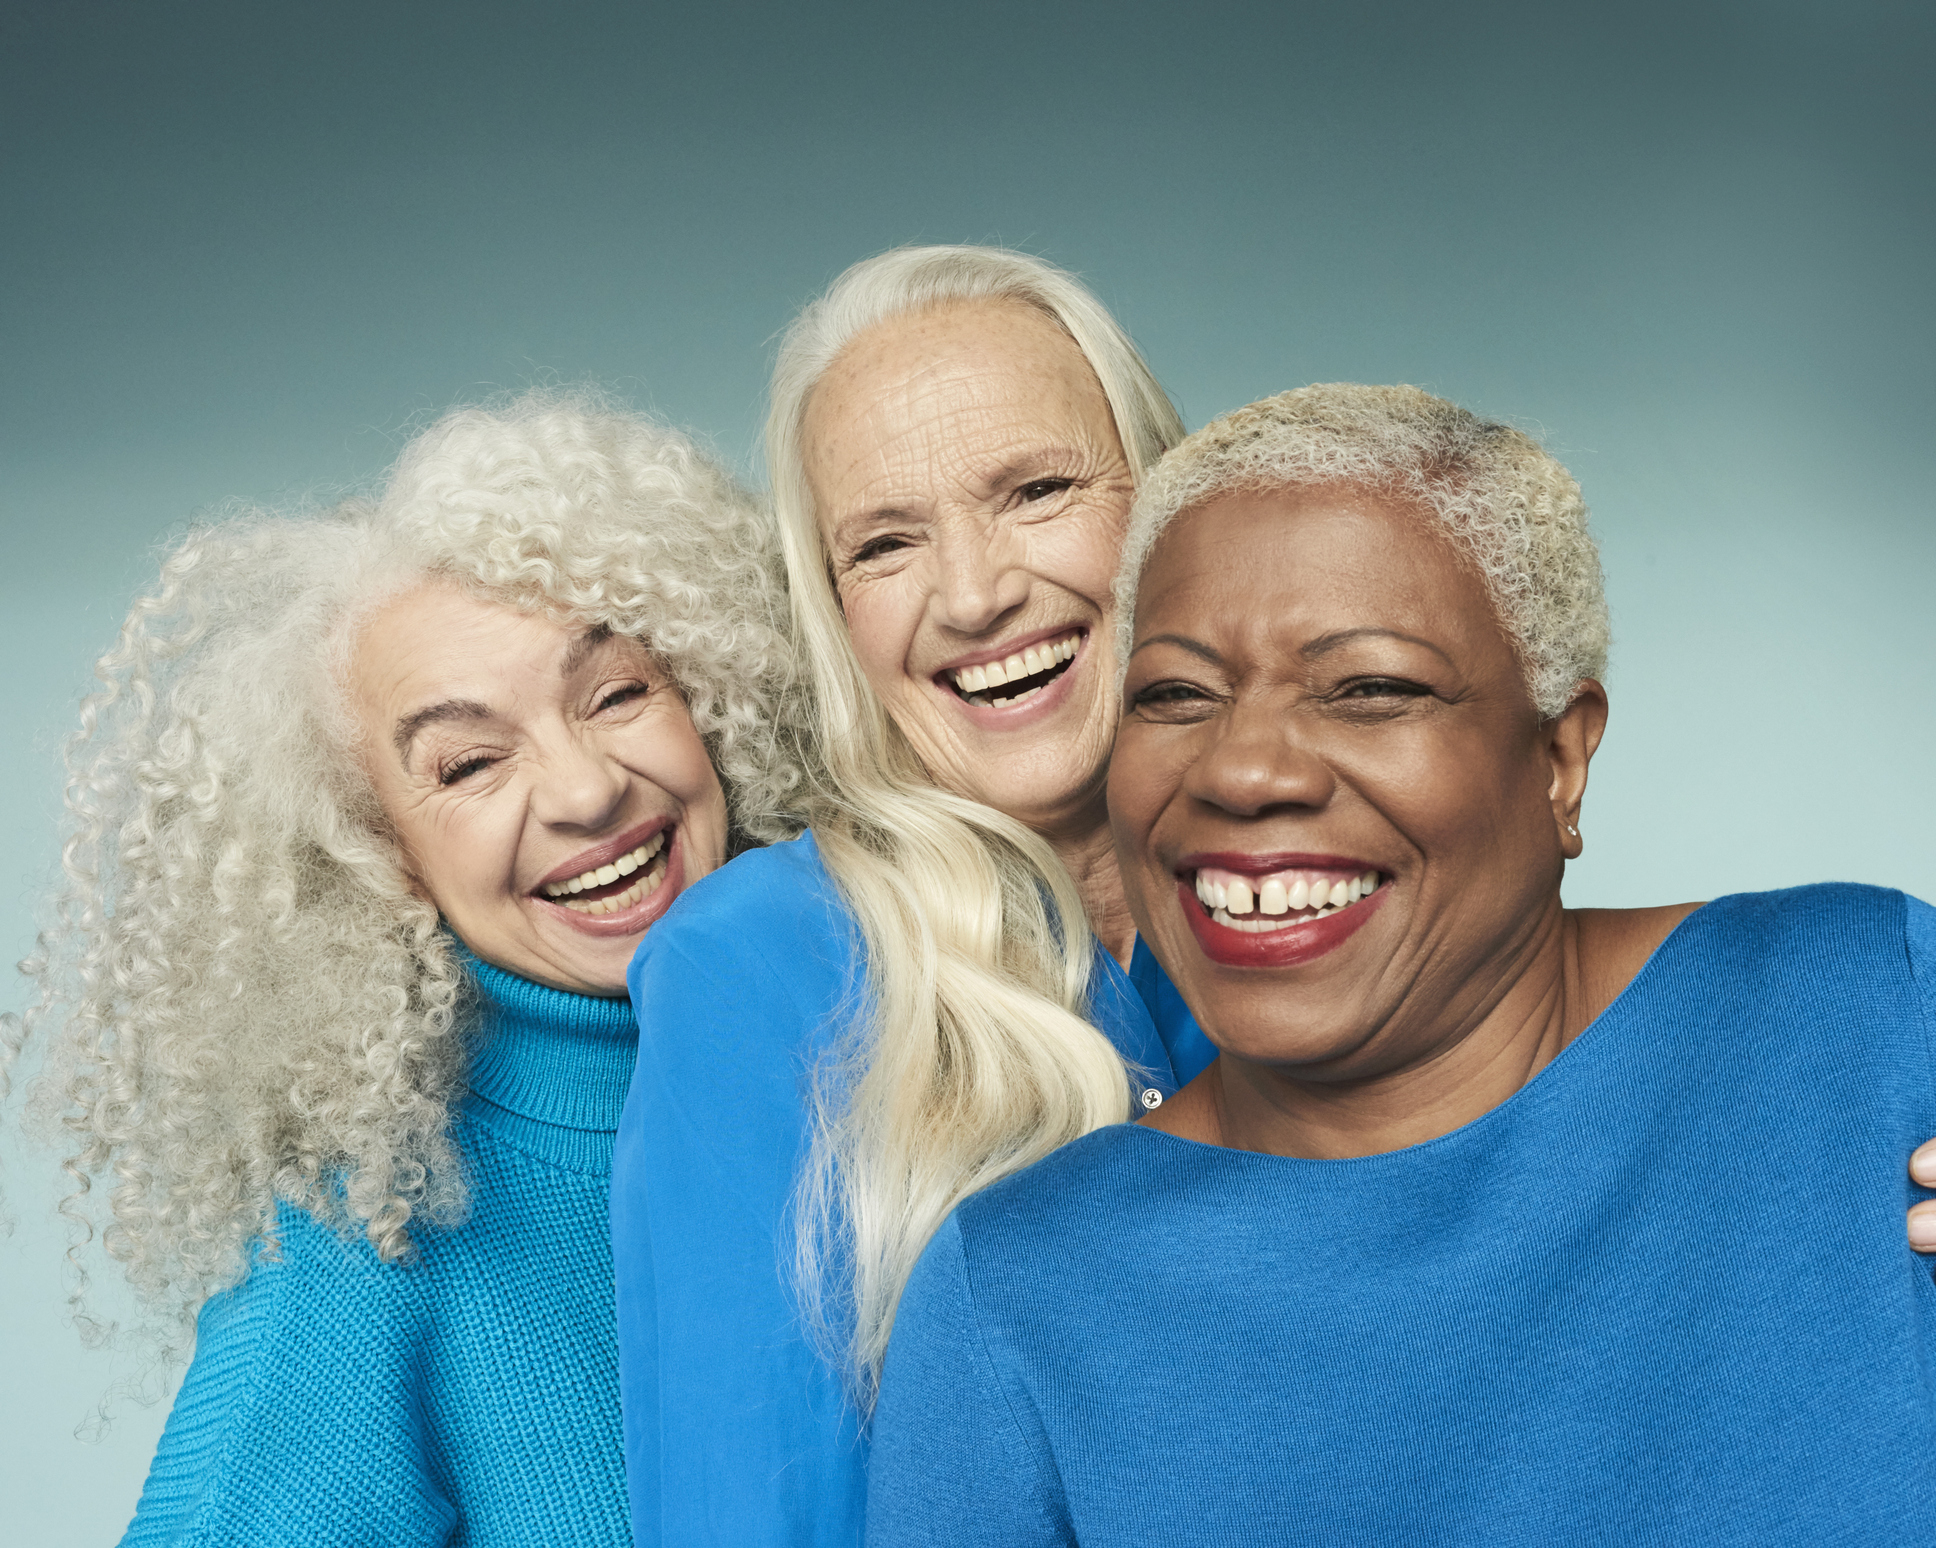 Three joyful women embracing, wearing casual sweaters